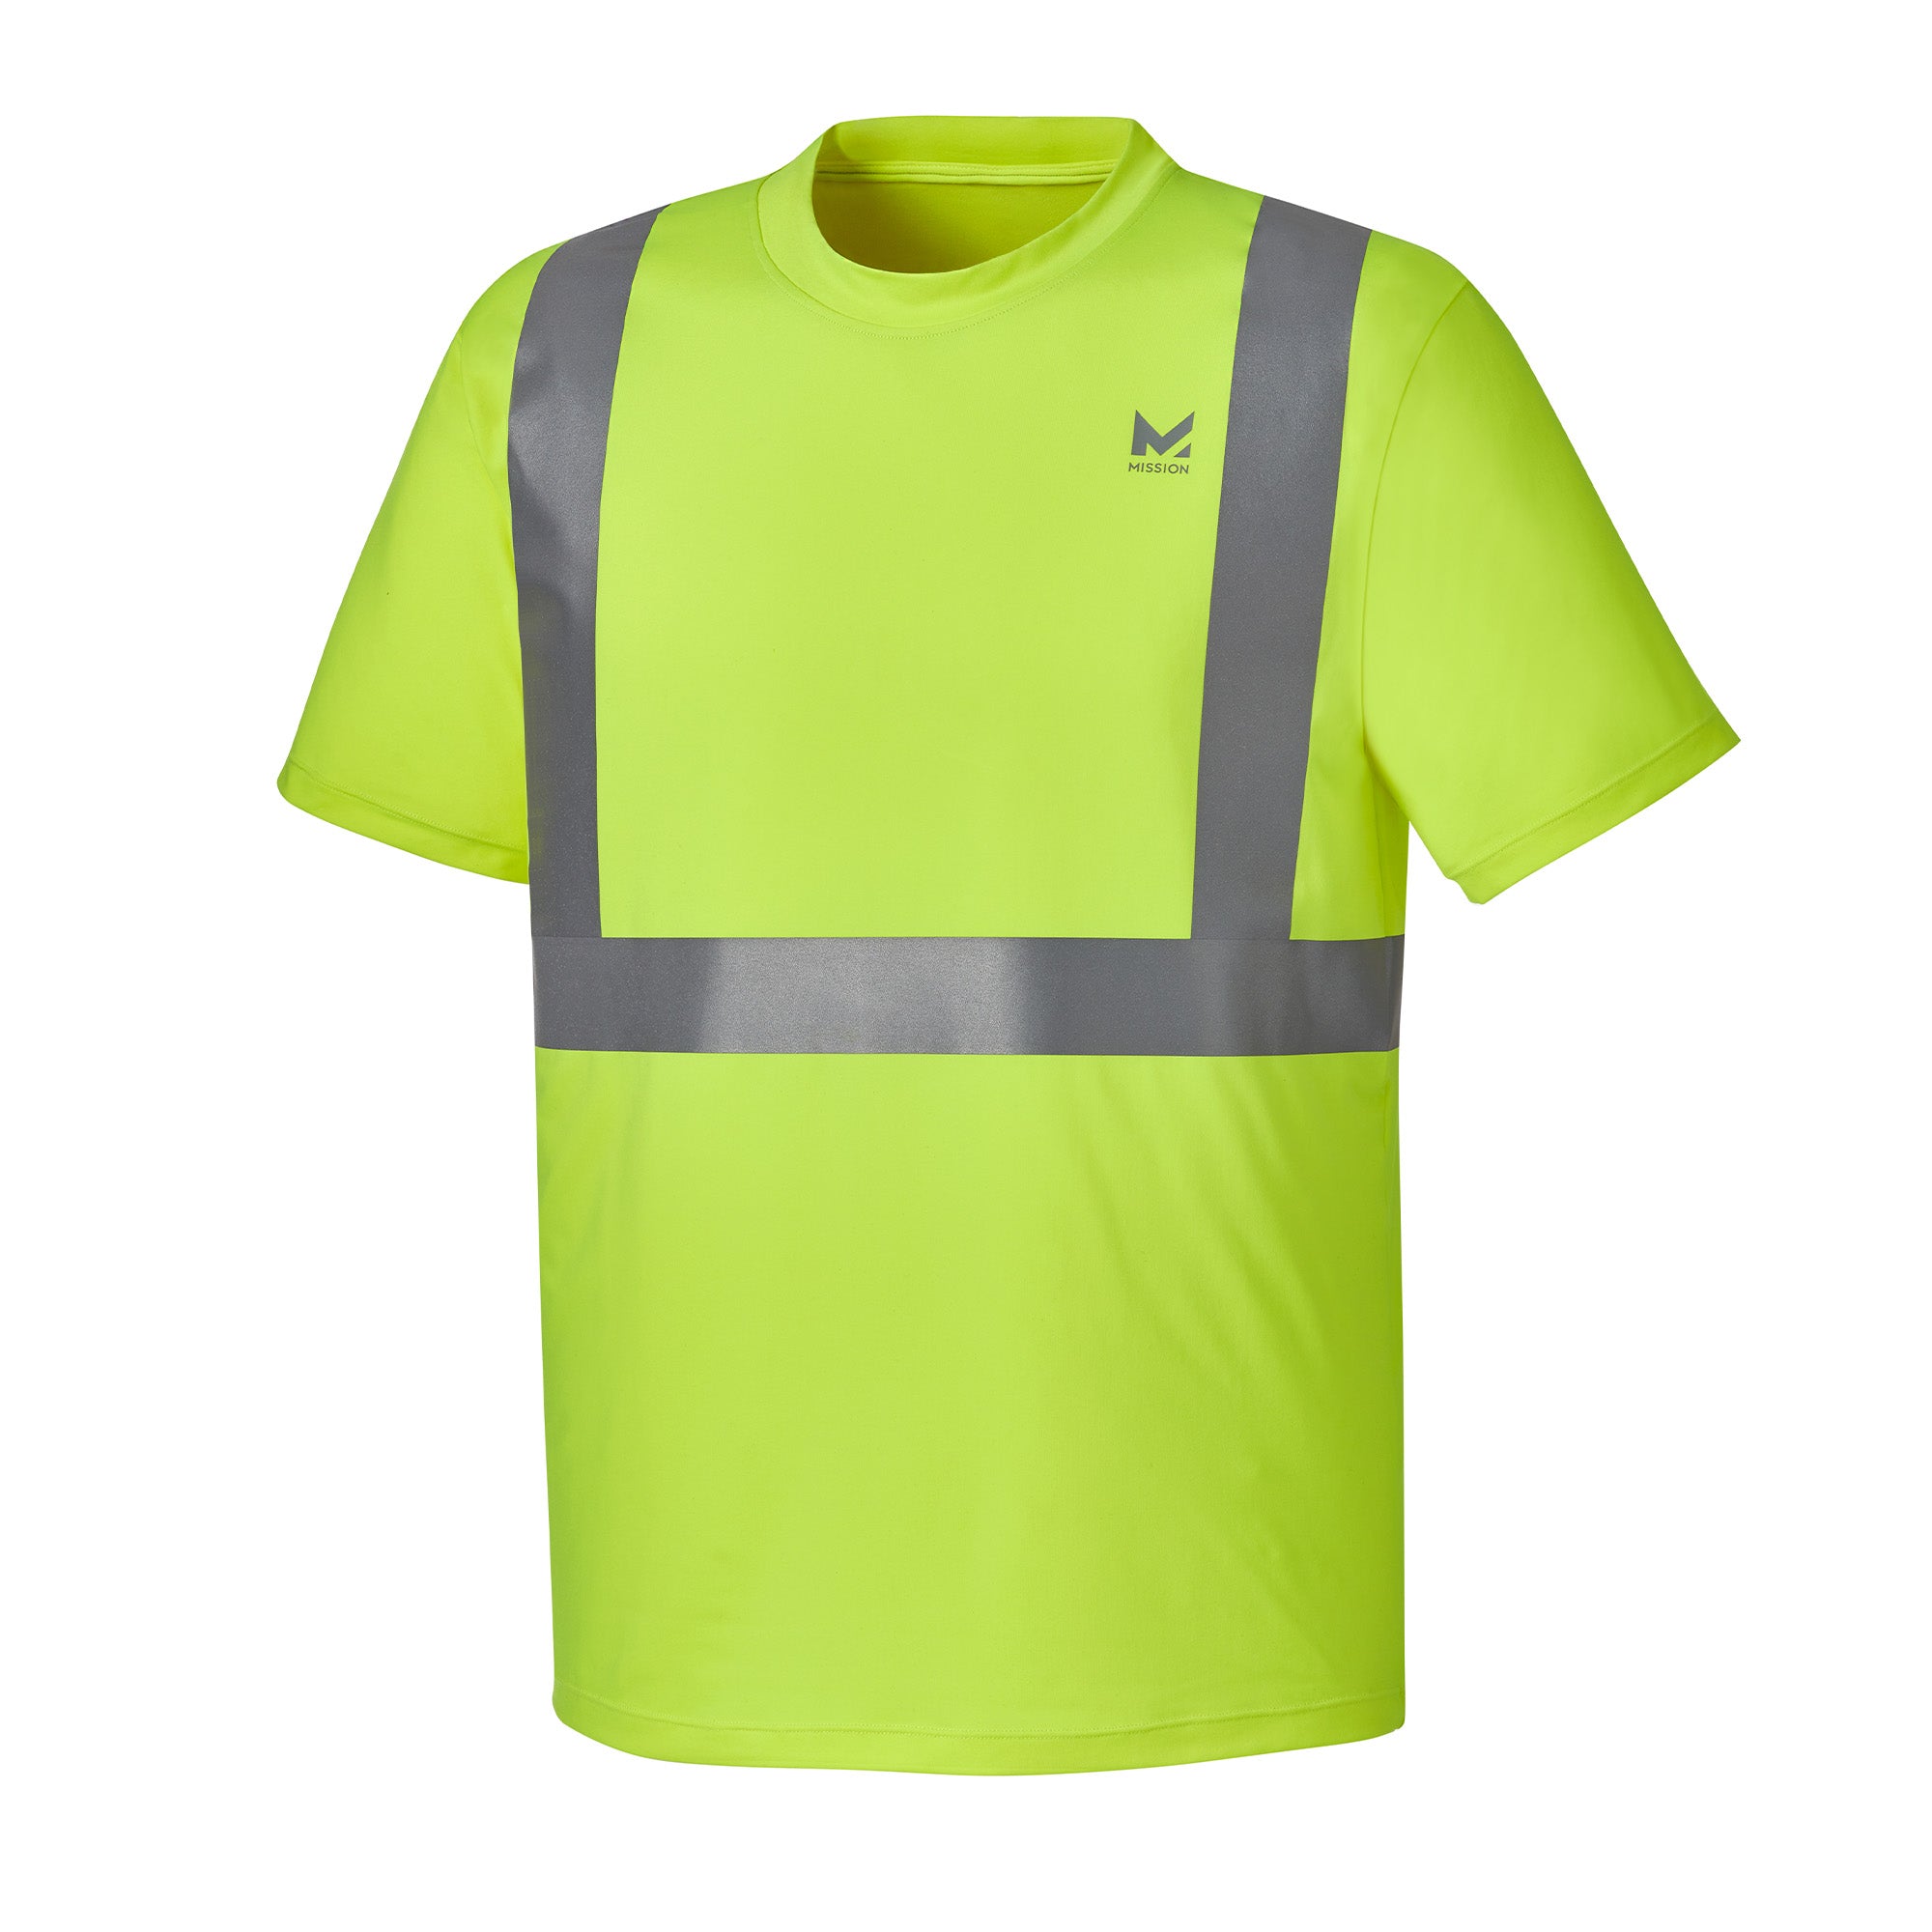 Cooling Safety Shirt Shirts MISSION M Hi Vis Yellow 